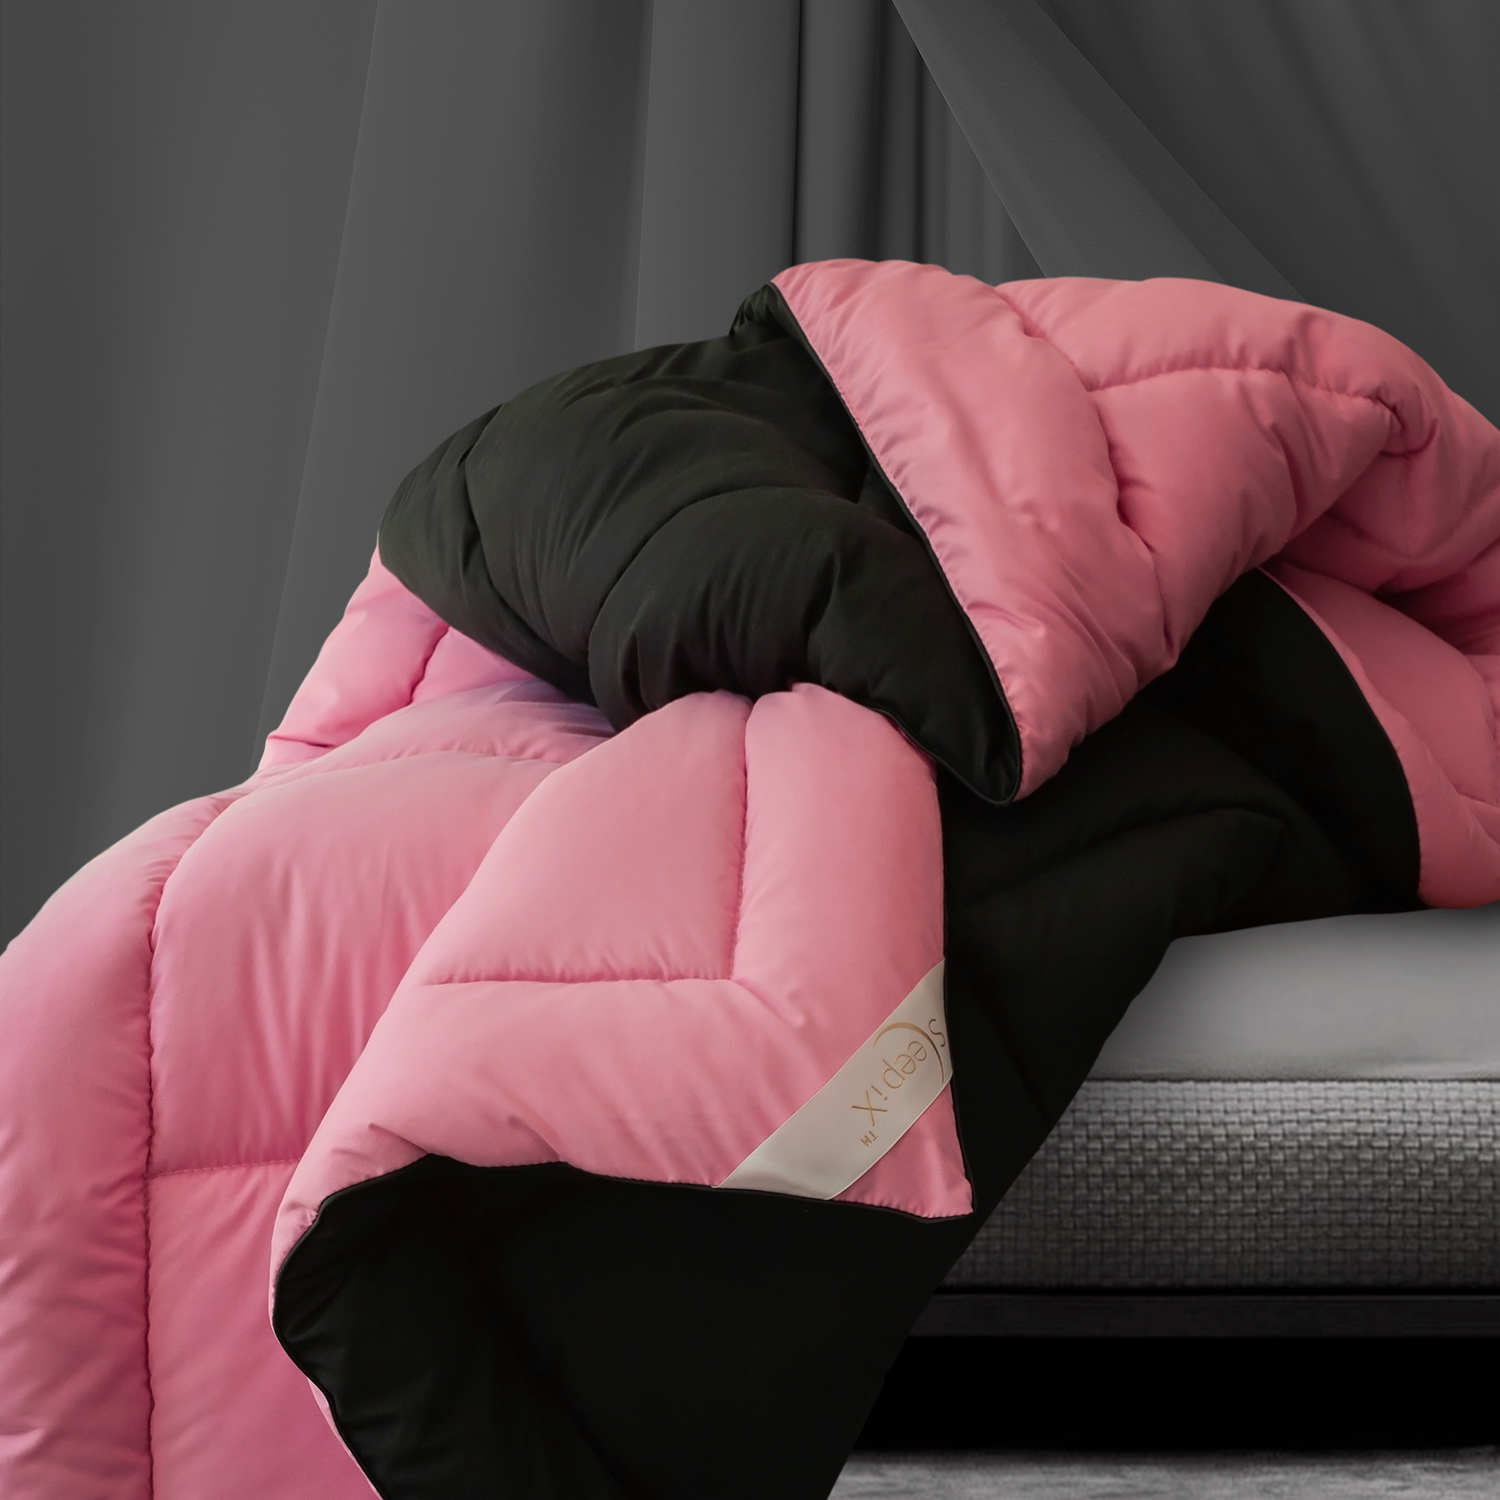 Одеяло MultiColor цвет: черный, розовый (200х220 см), размер 200х220 см pva410837 Одеяло MultiColor цвет: черный, розовый (200х220 см) - фото 1